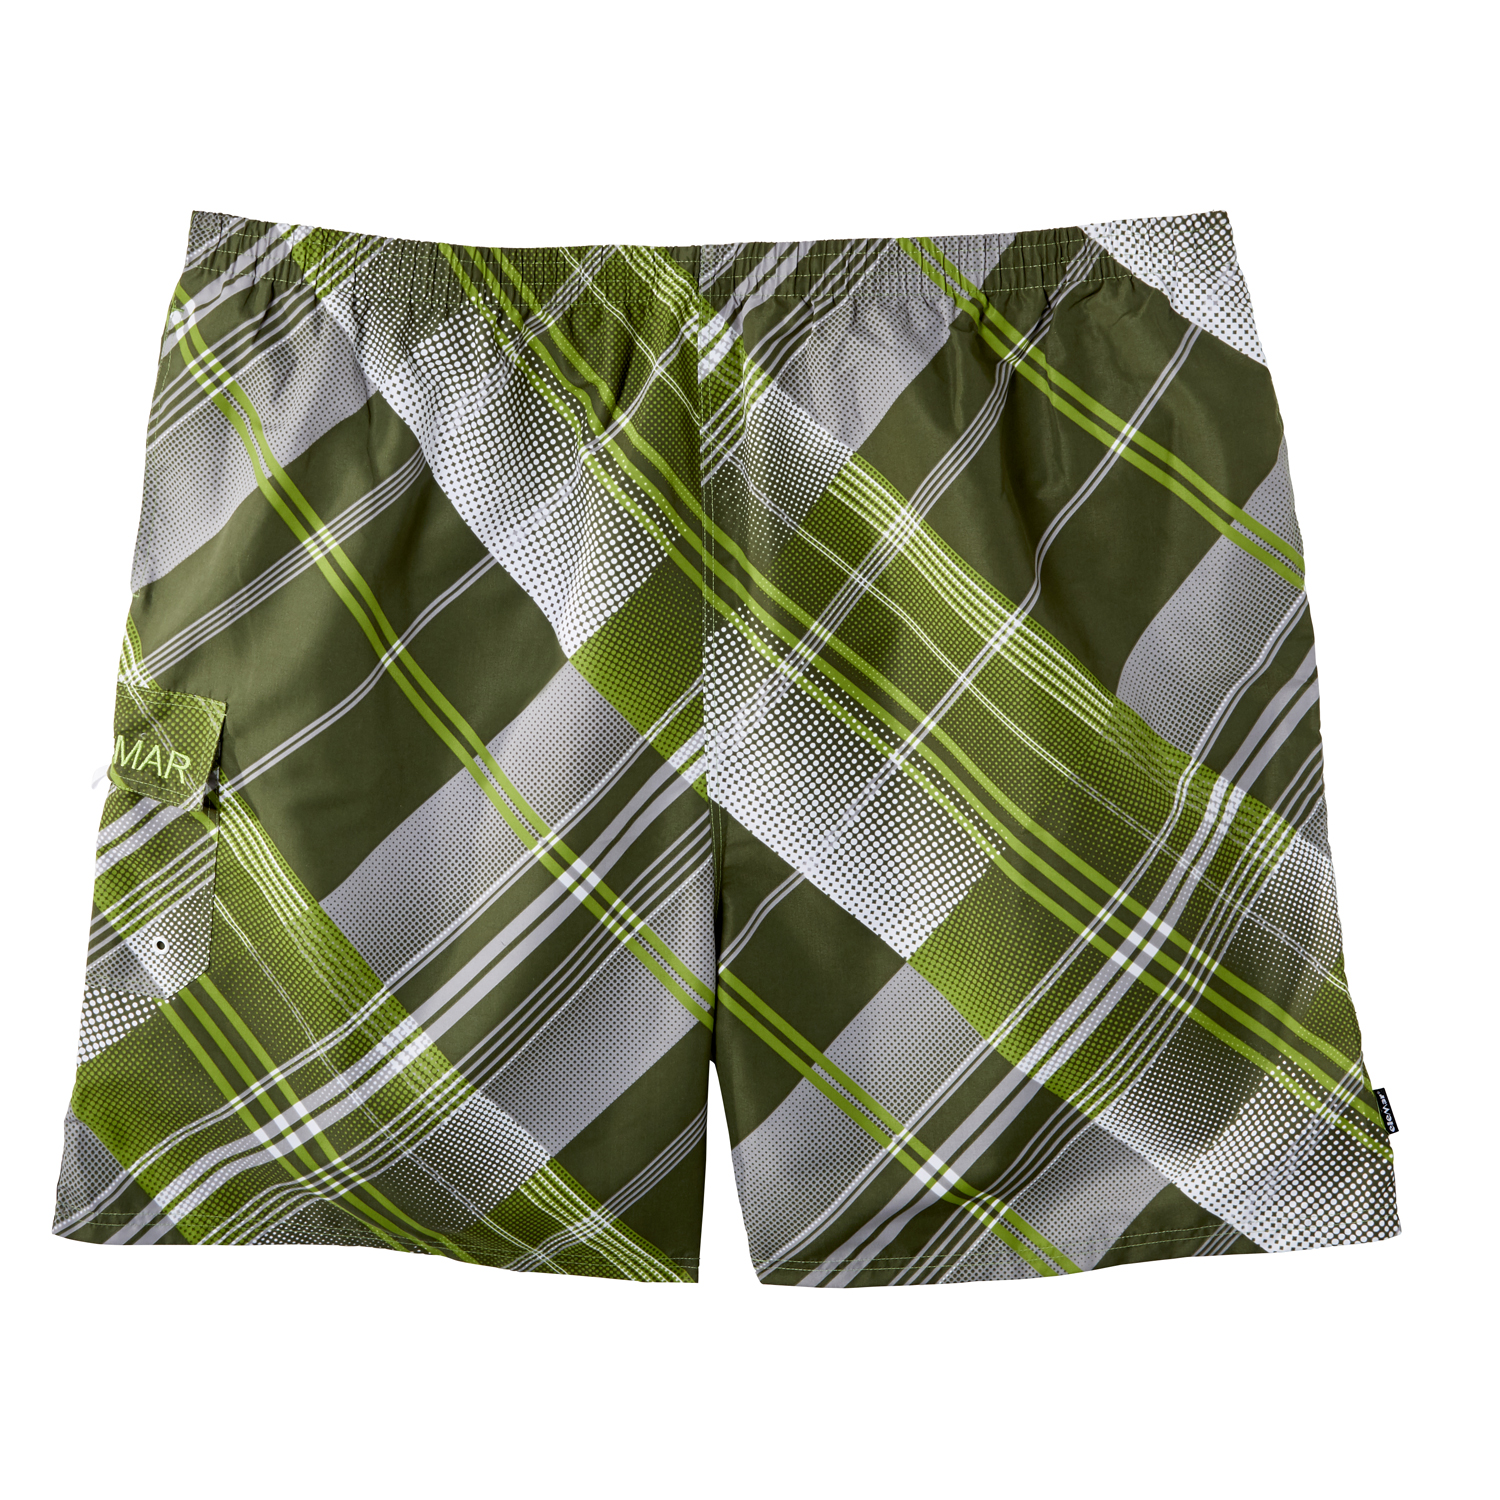 Swim bermudas by eleMar for men green patterned in oversizes 7XL, 8XL, 9XL